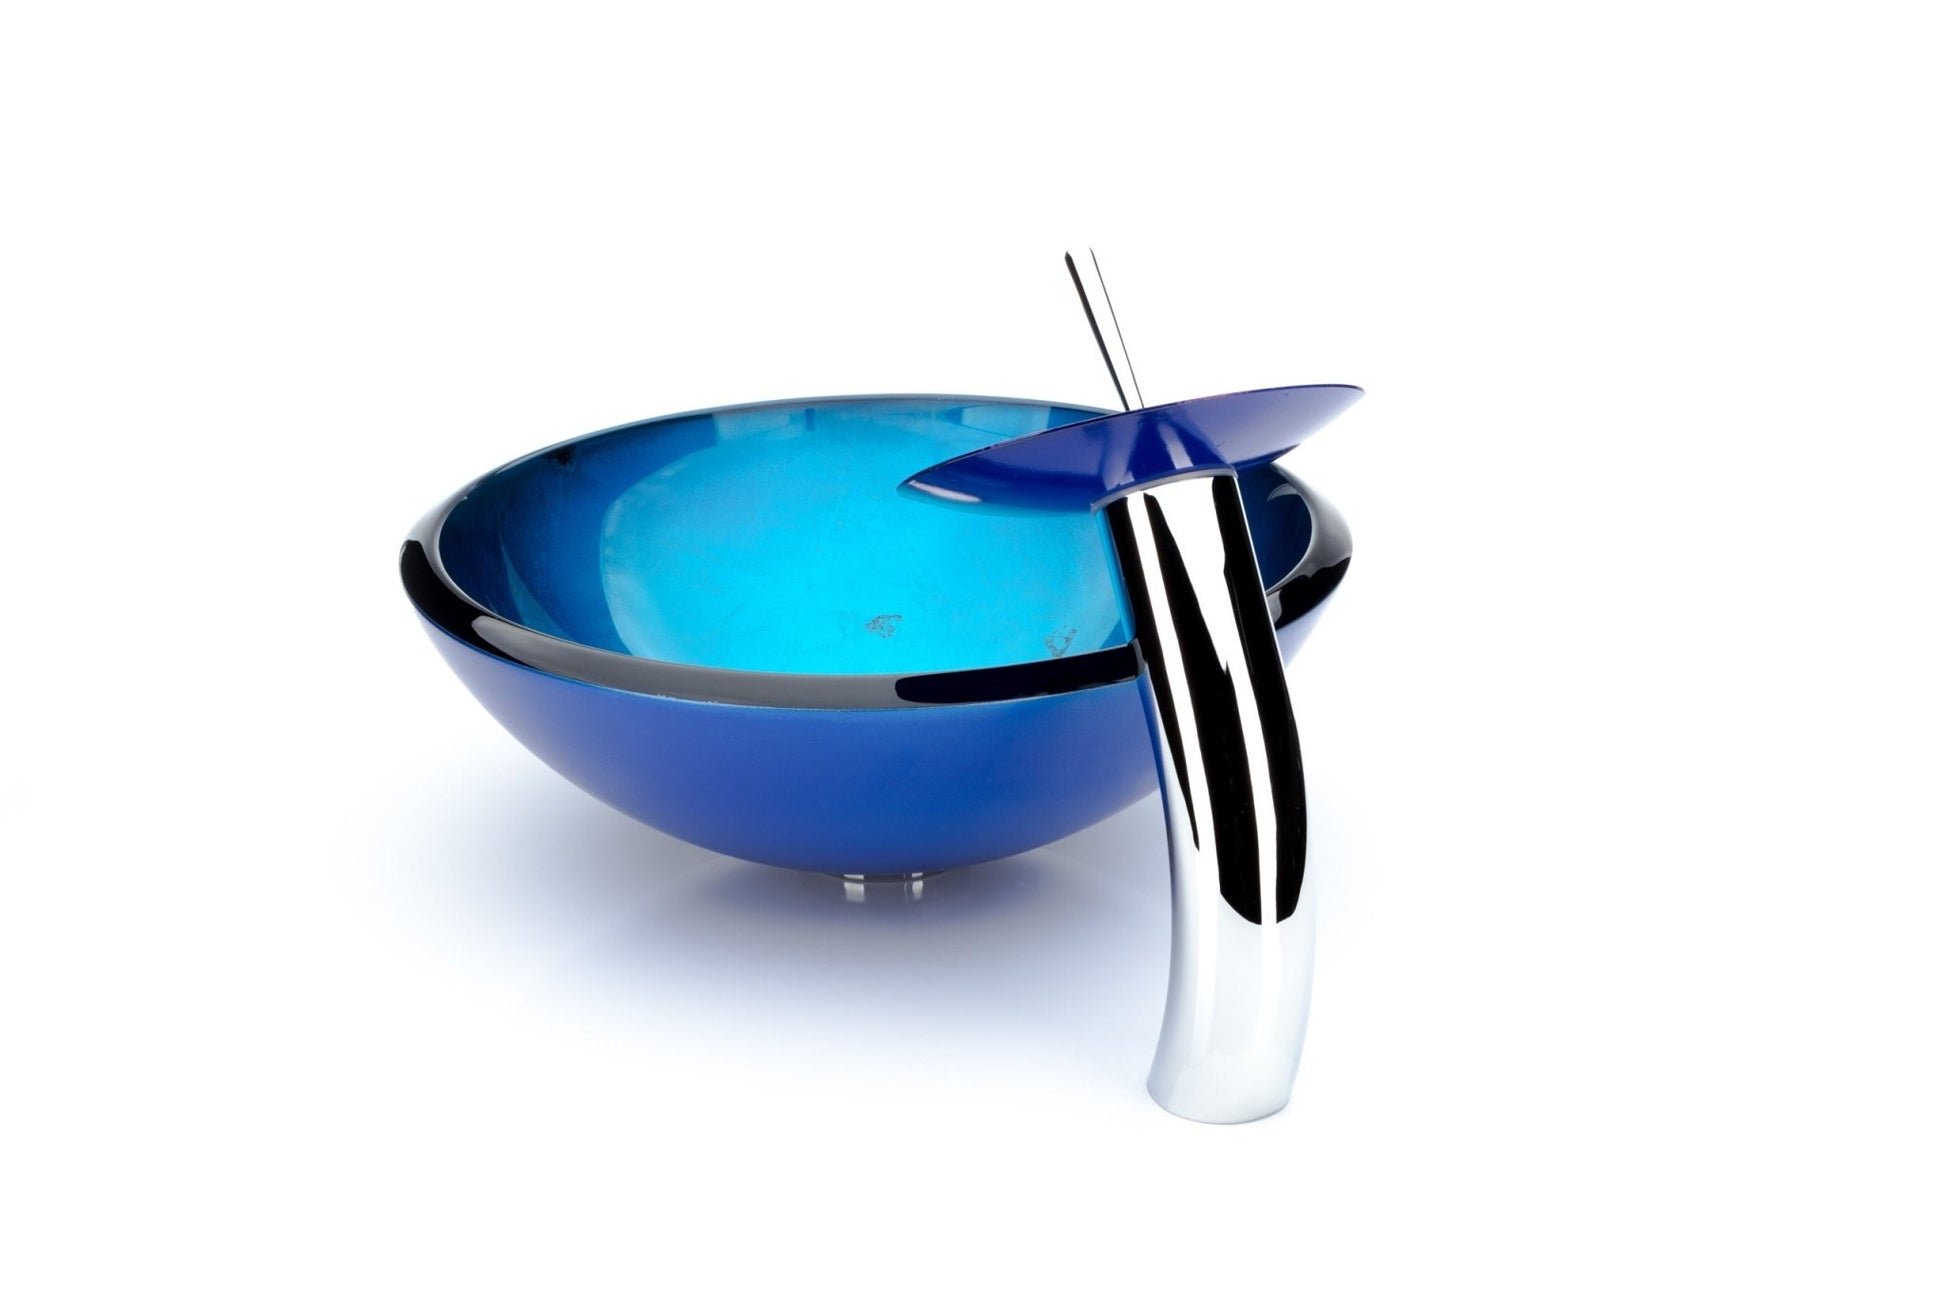 Blue Leaf Round Glass Vessel Sink Combo Waterfall Faucet Set - |VESIMI Design|